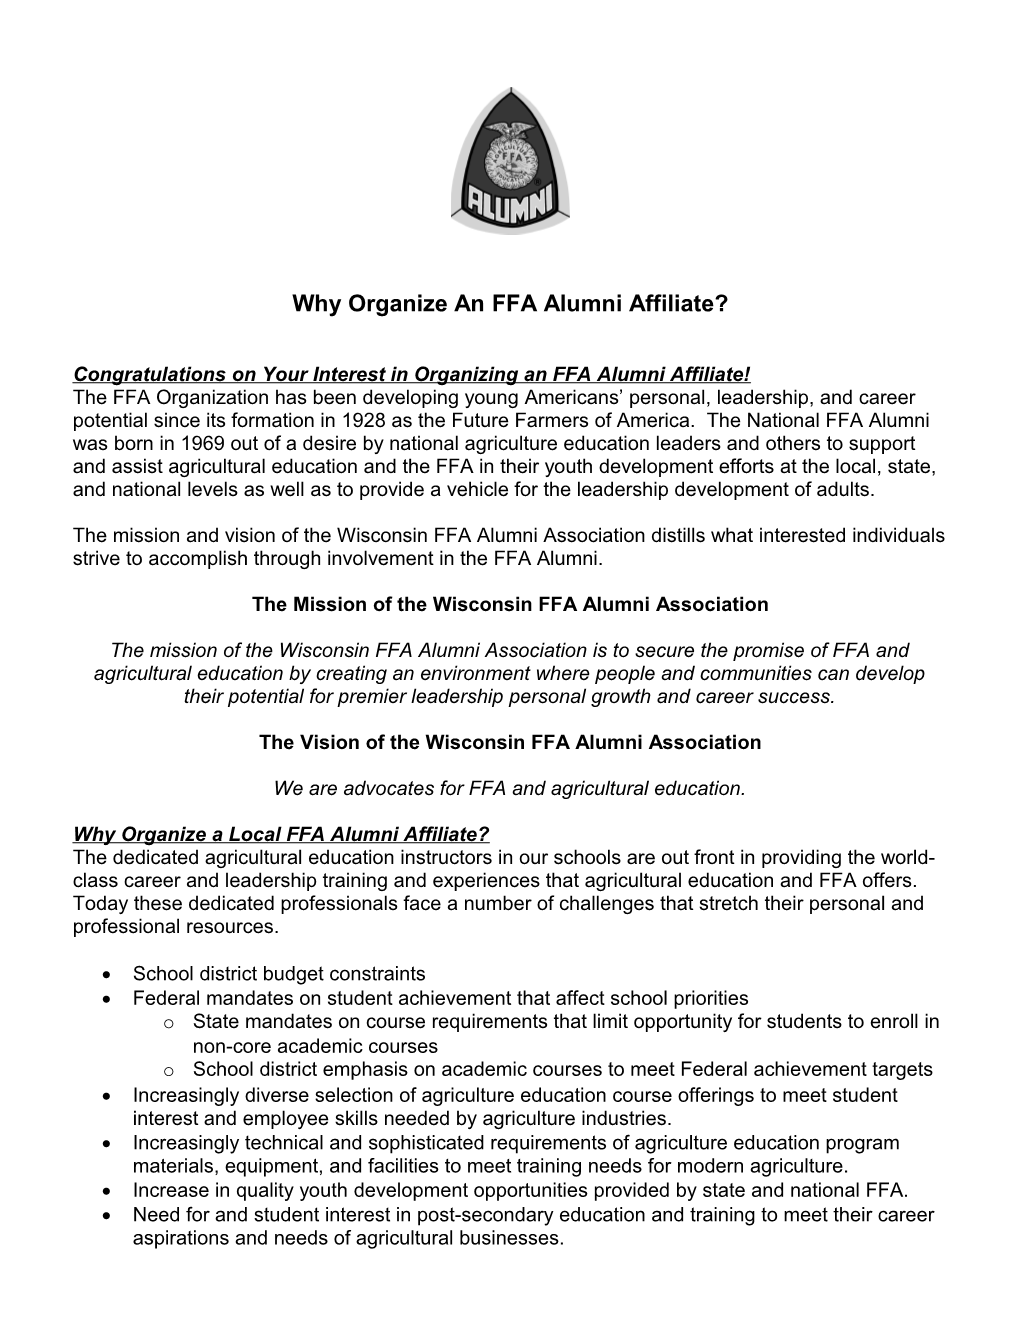 How to Organize an FFA Alumni Affiliate